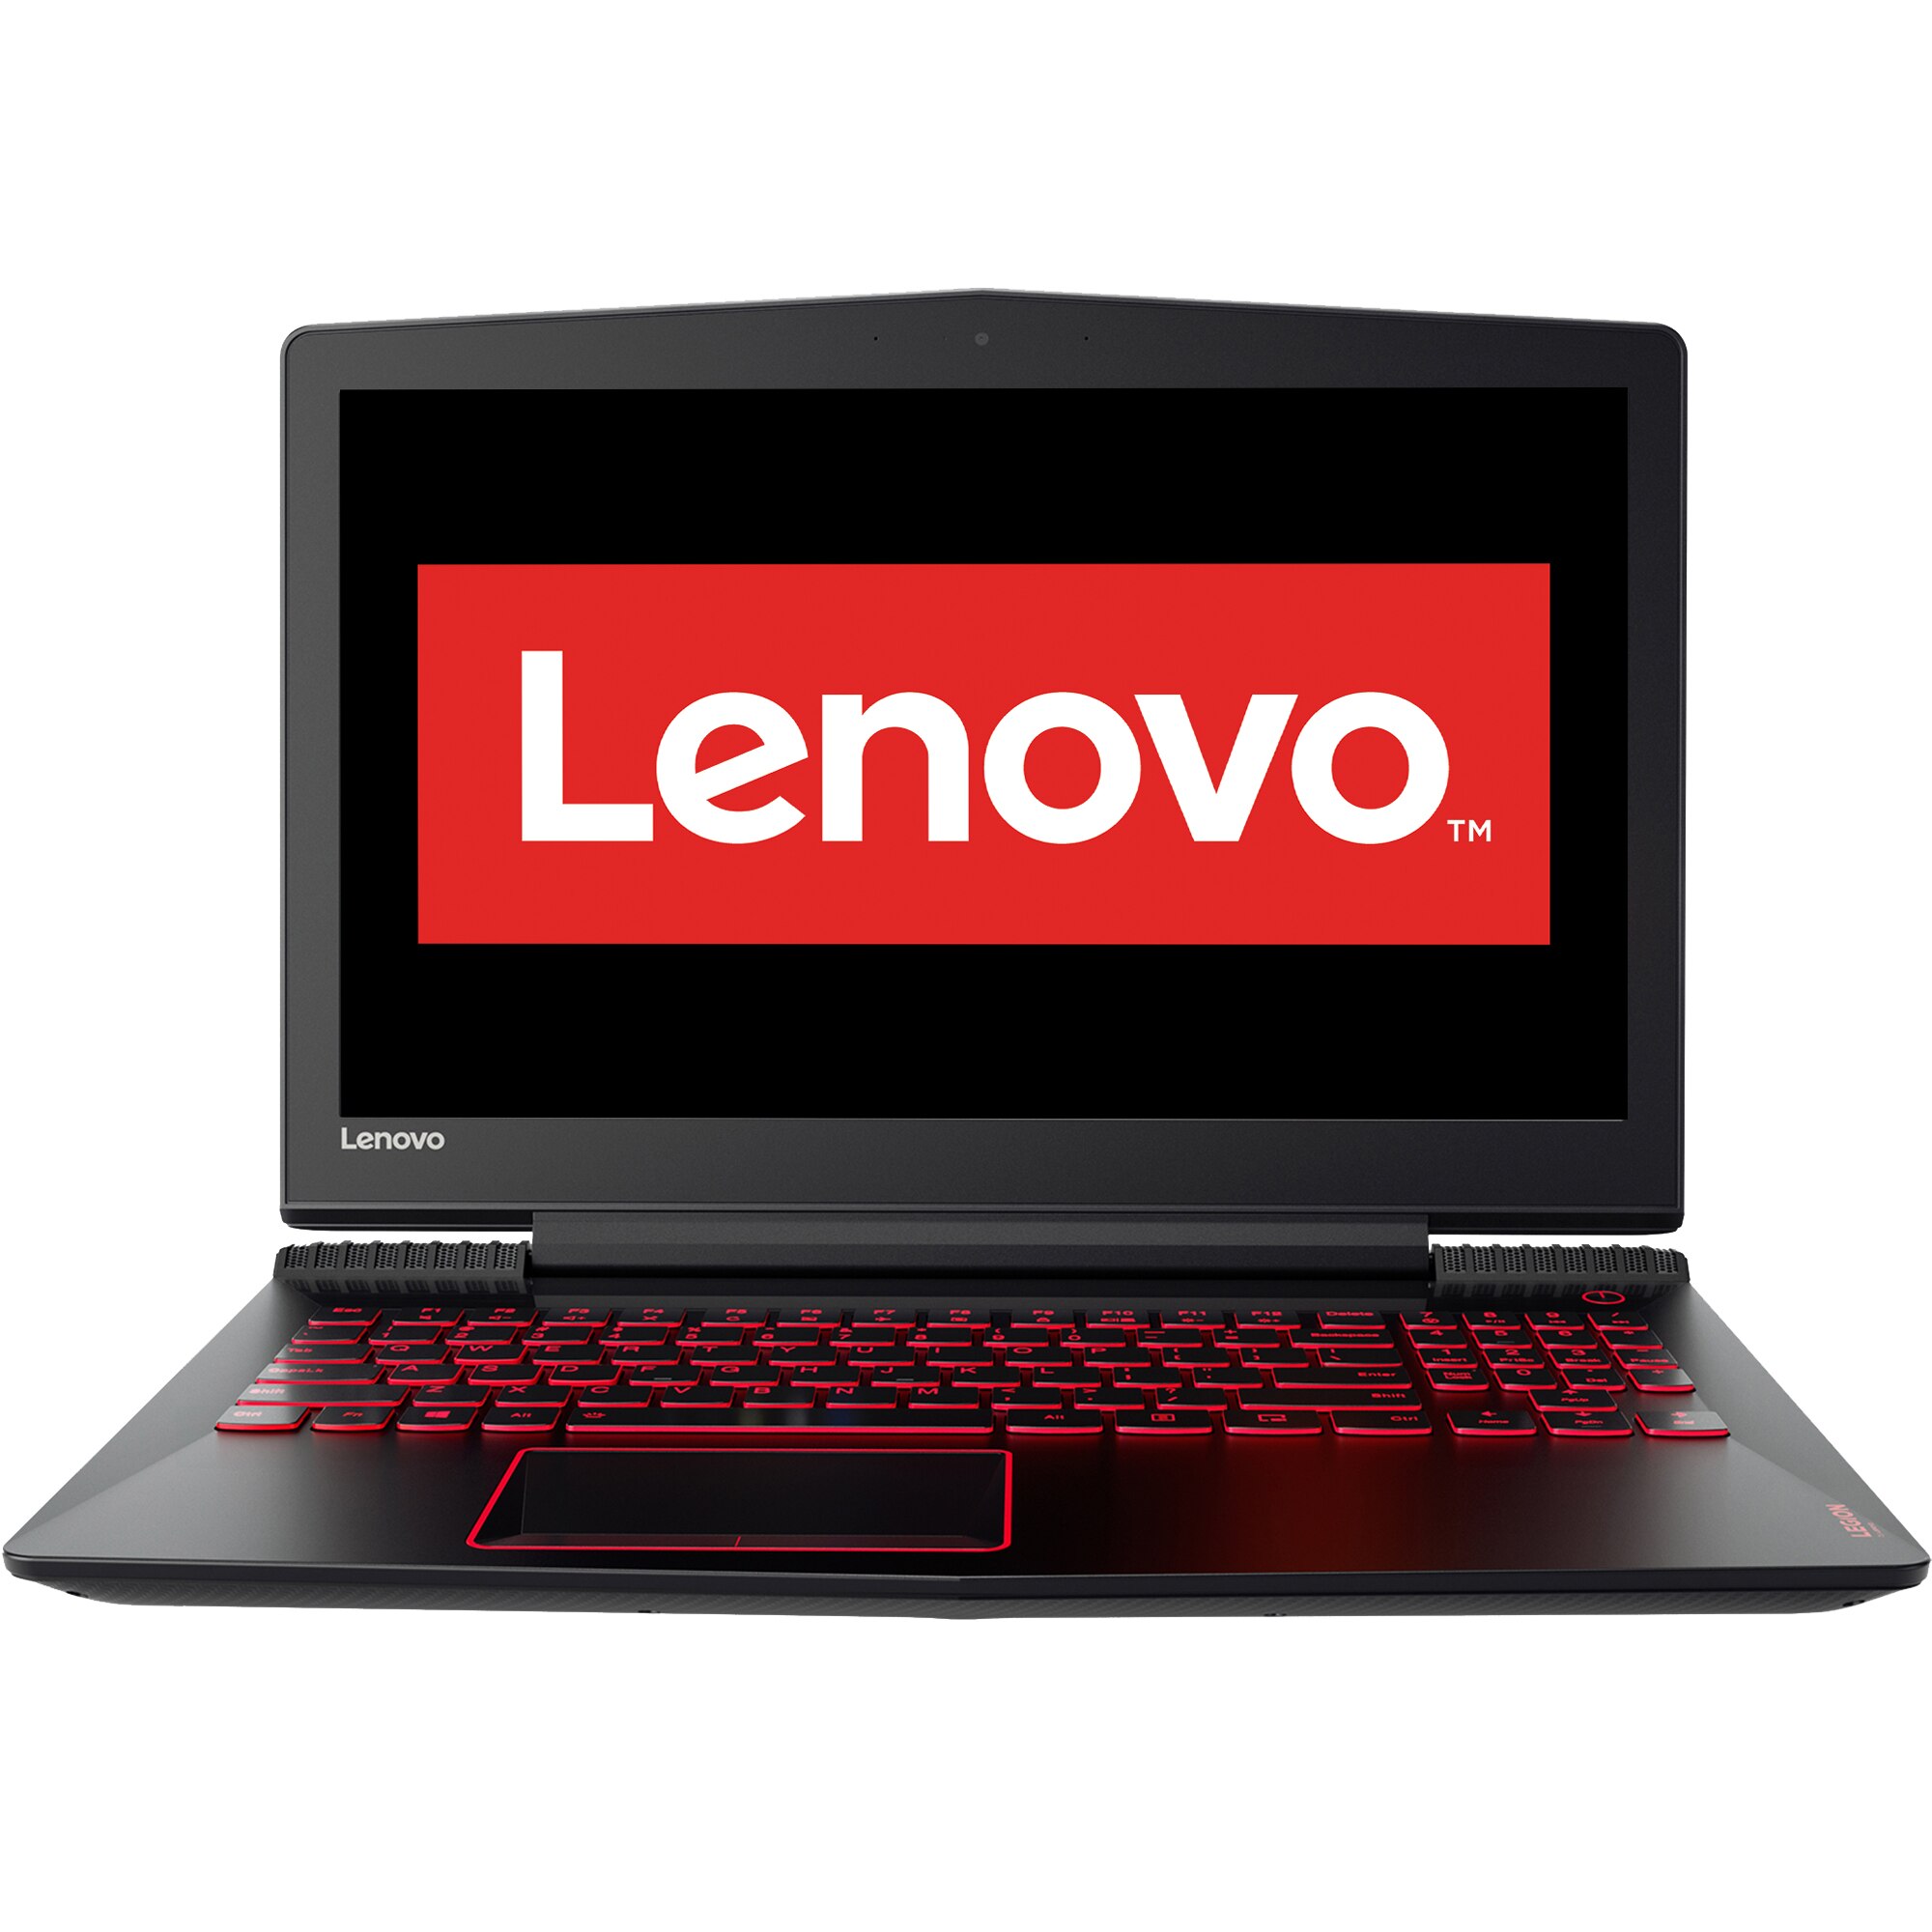 Fotografie Laptop Gaming Lenovo Legion Y520-15IKBN cu procesor Intel® Core® i7-7700HQ 2.80GHz, Kaby Lake™, 15.6", Full HD, IPS, 8GB, 1TB, nVIDIA GeForce GTX 1050 Ti 4GB, Free DOS, Black